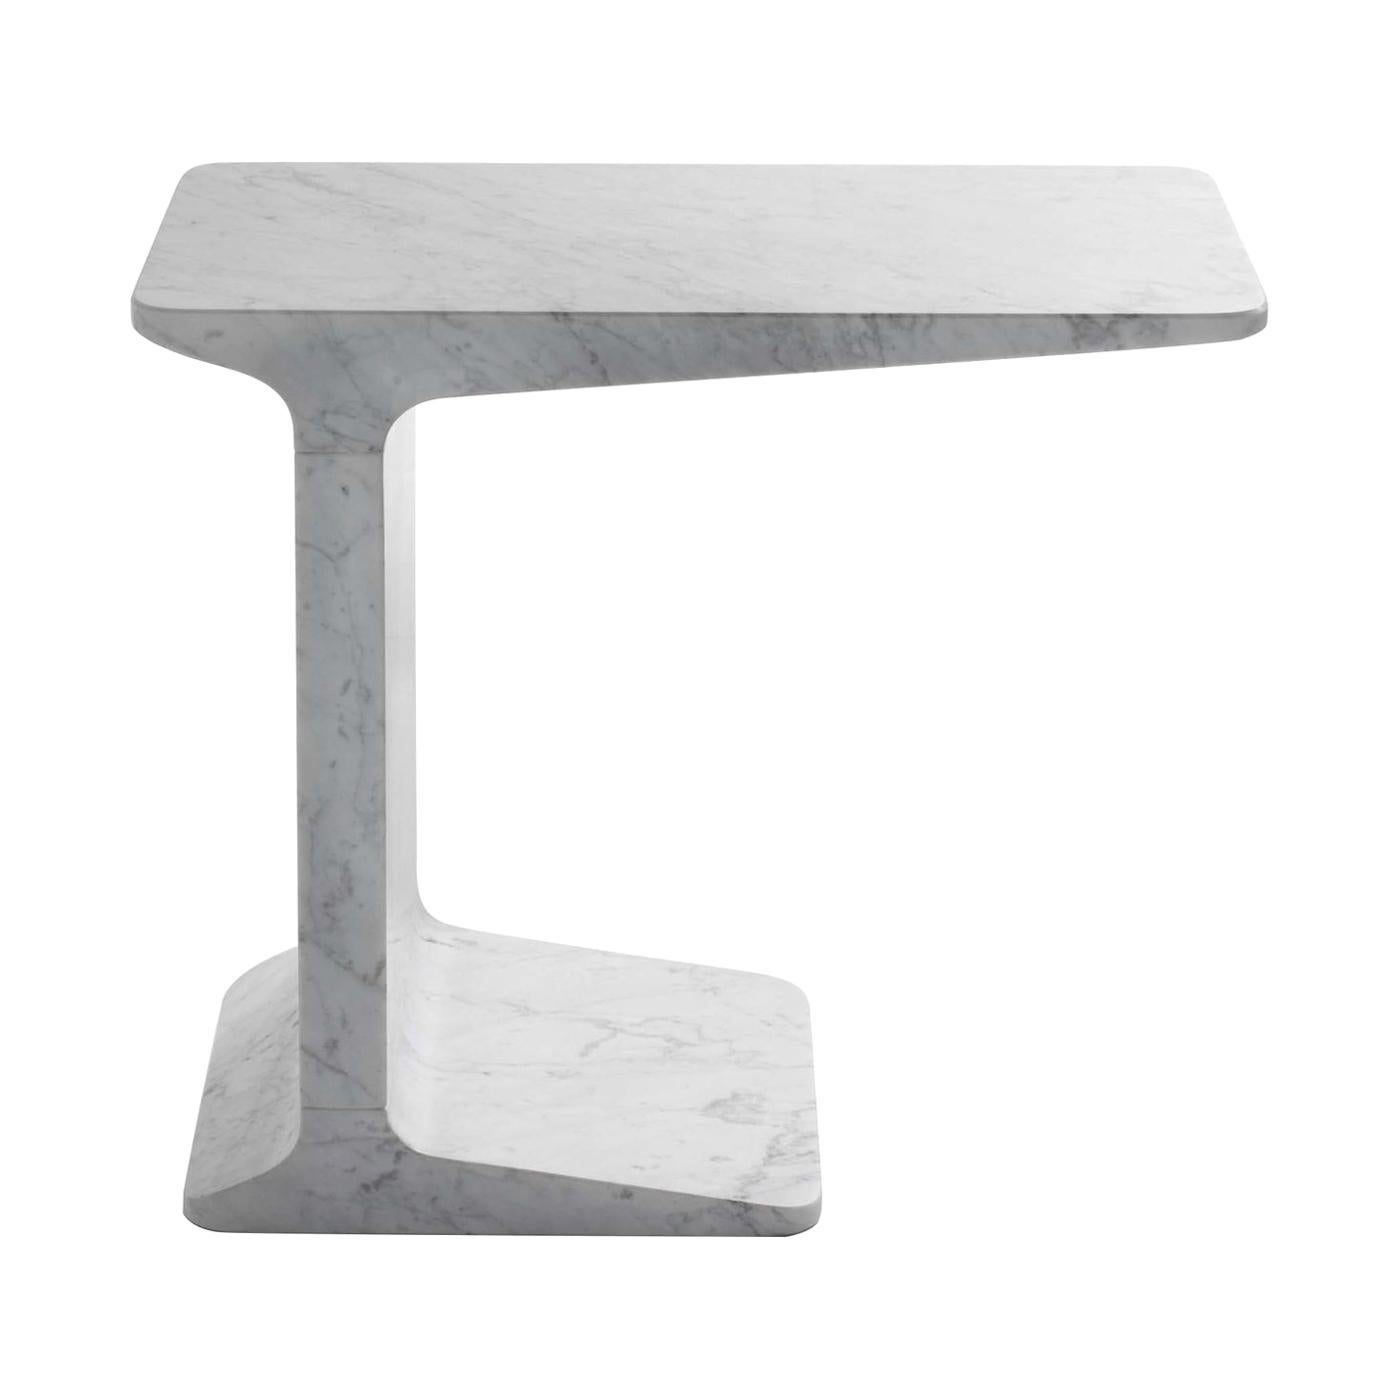 Salto Side Table, Design James Irvine, 2009